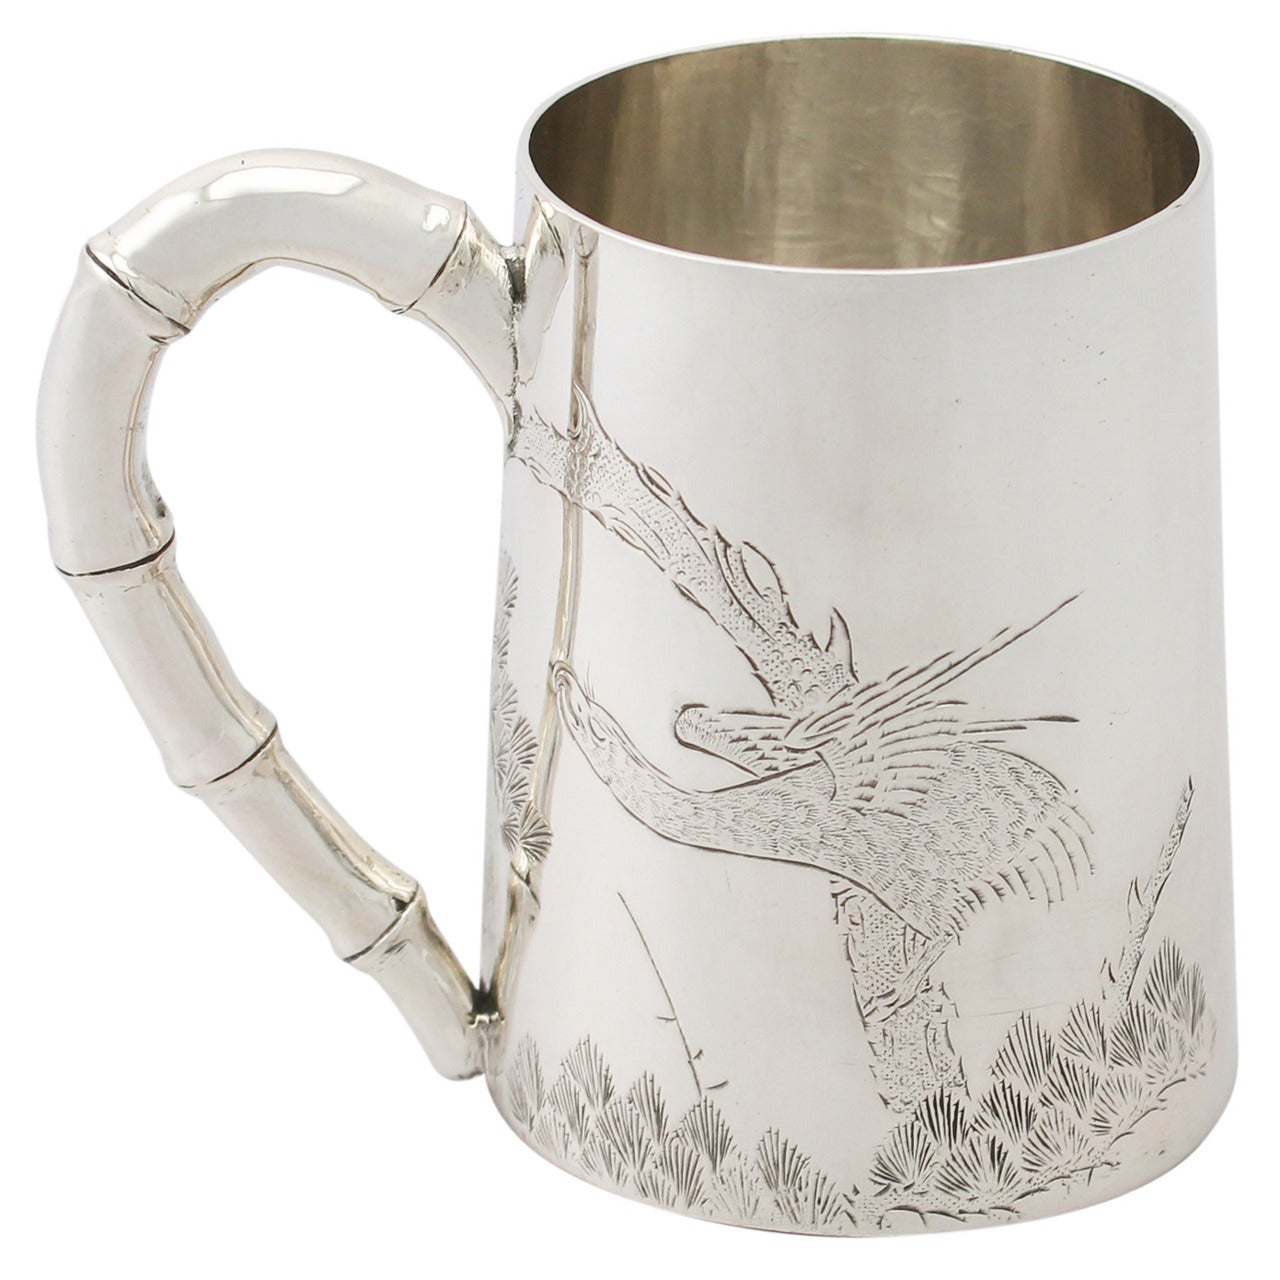 Antique Chinese Export Silver Christening Mug, circa 1860